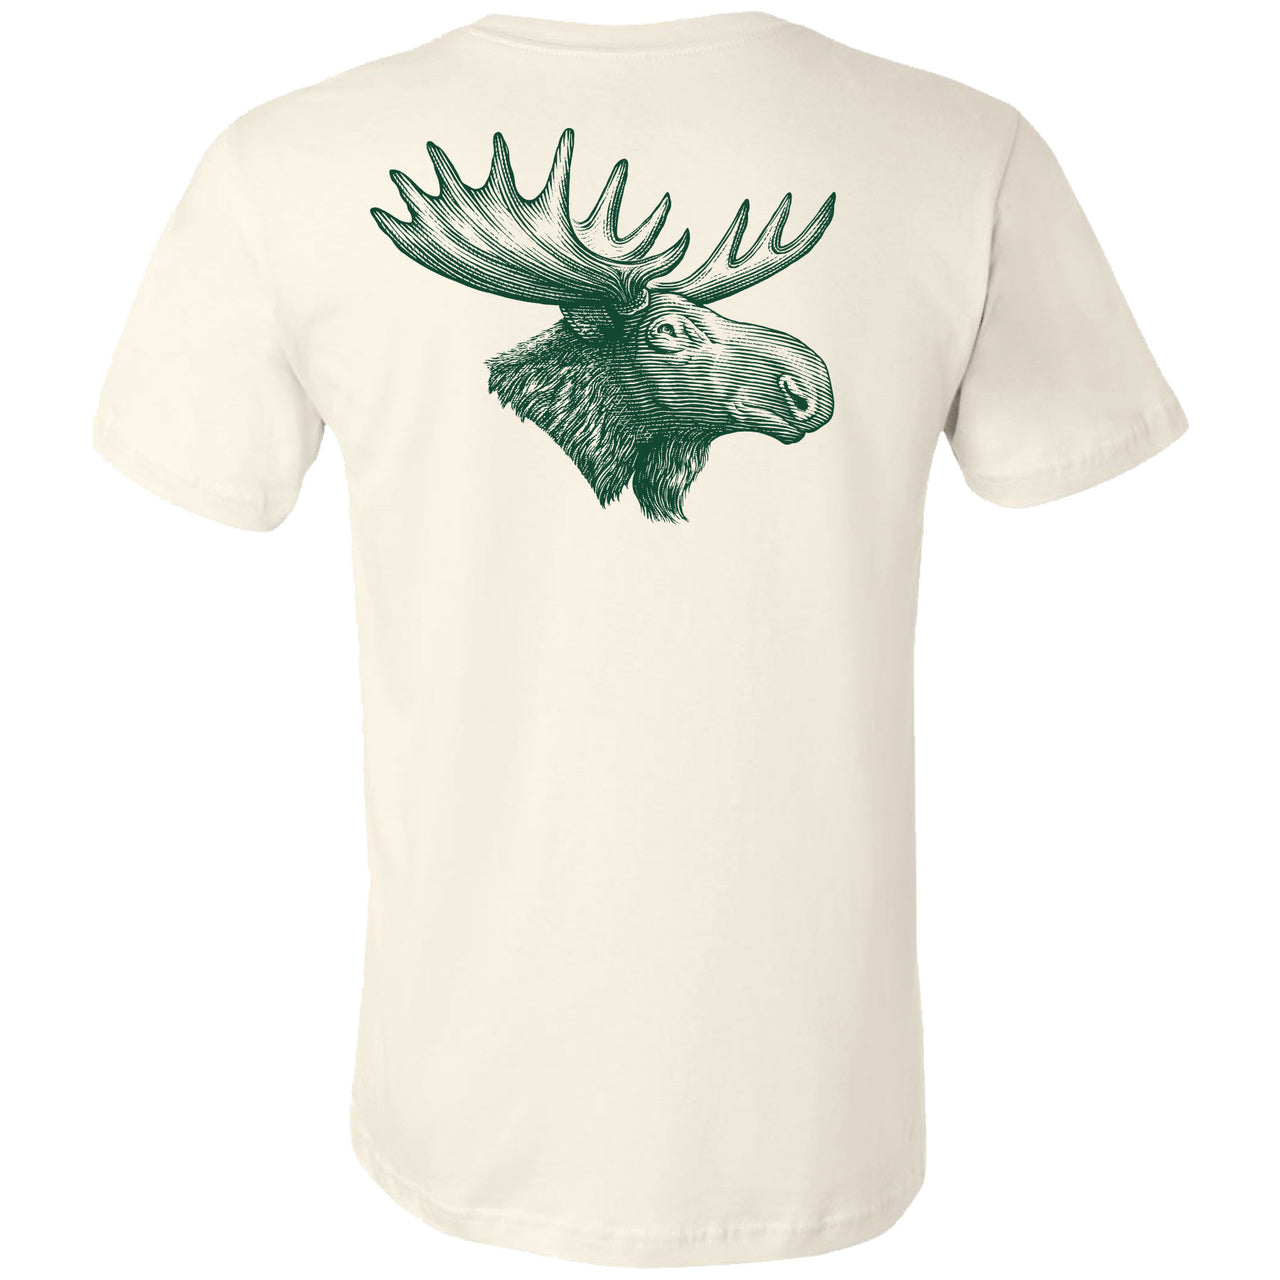 Moosehead Lager - Logo 2-sided T-shirt